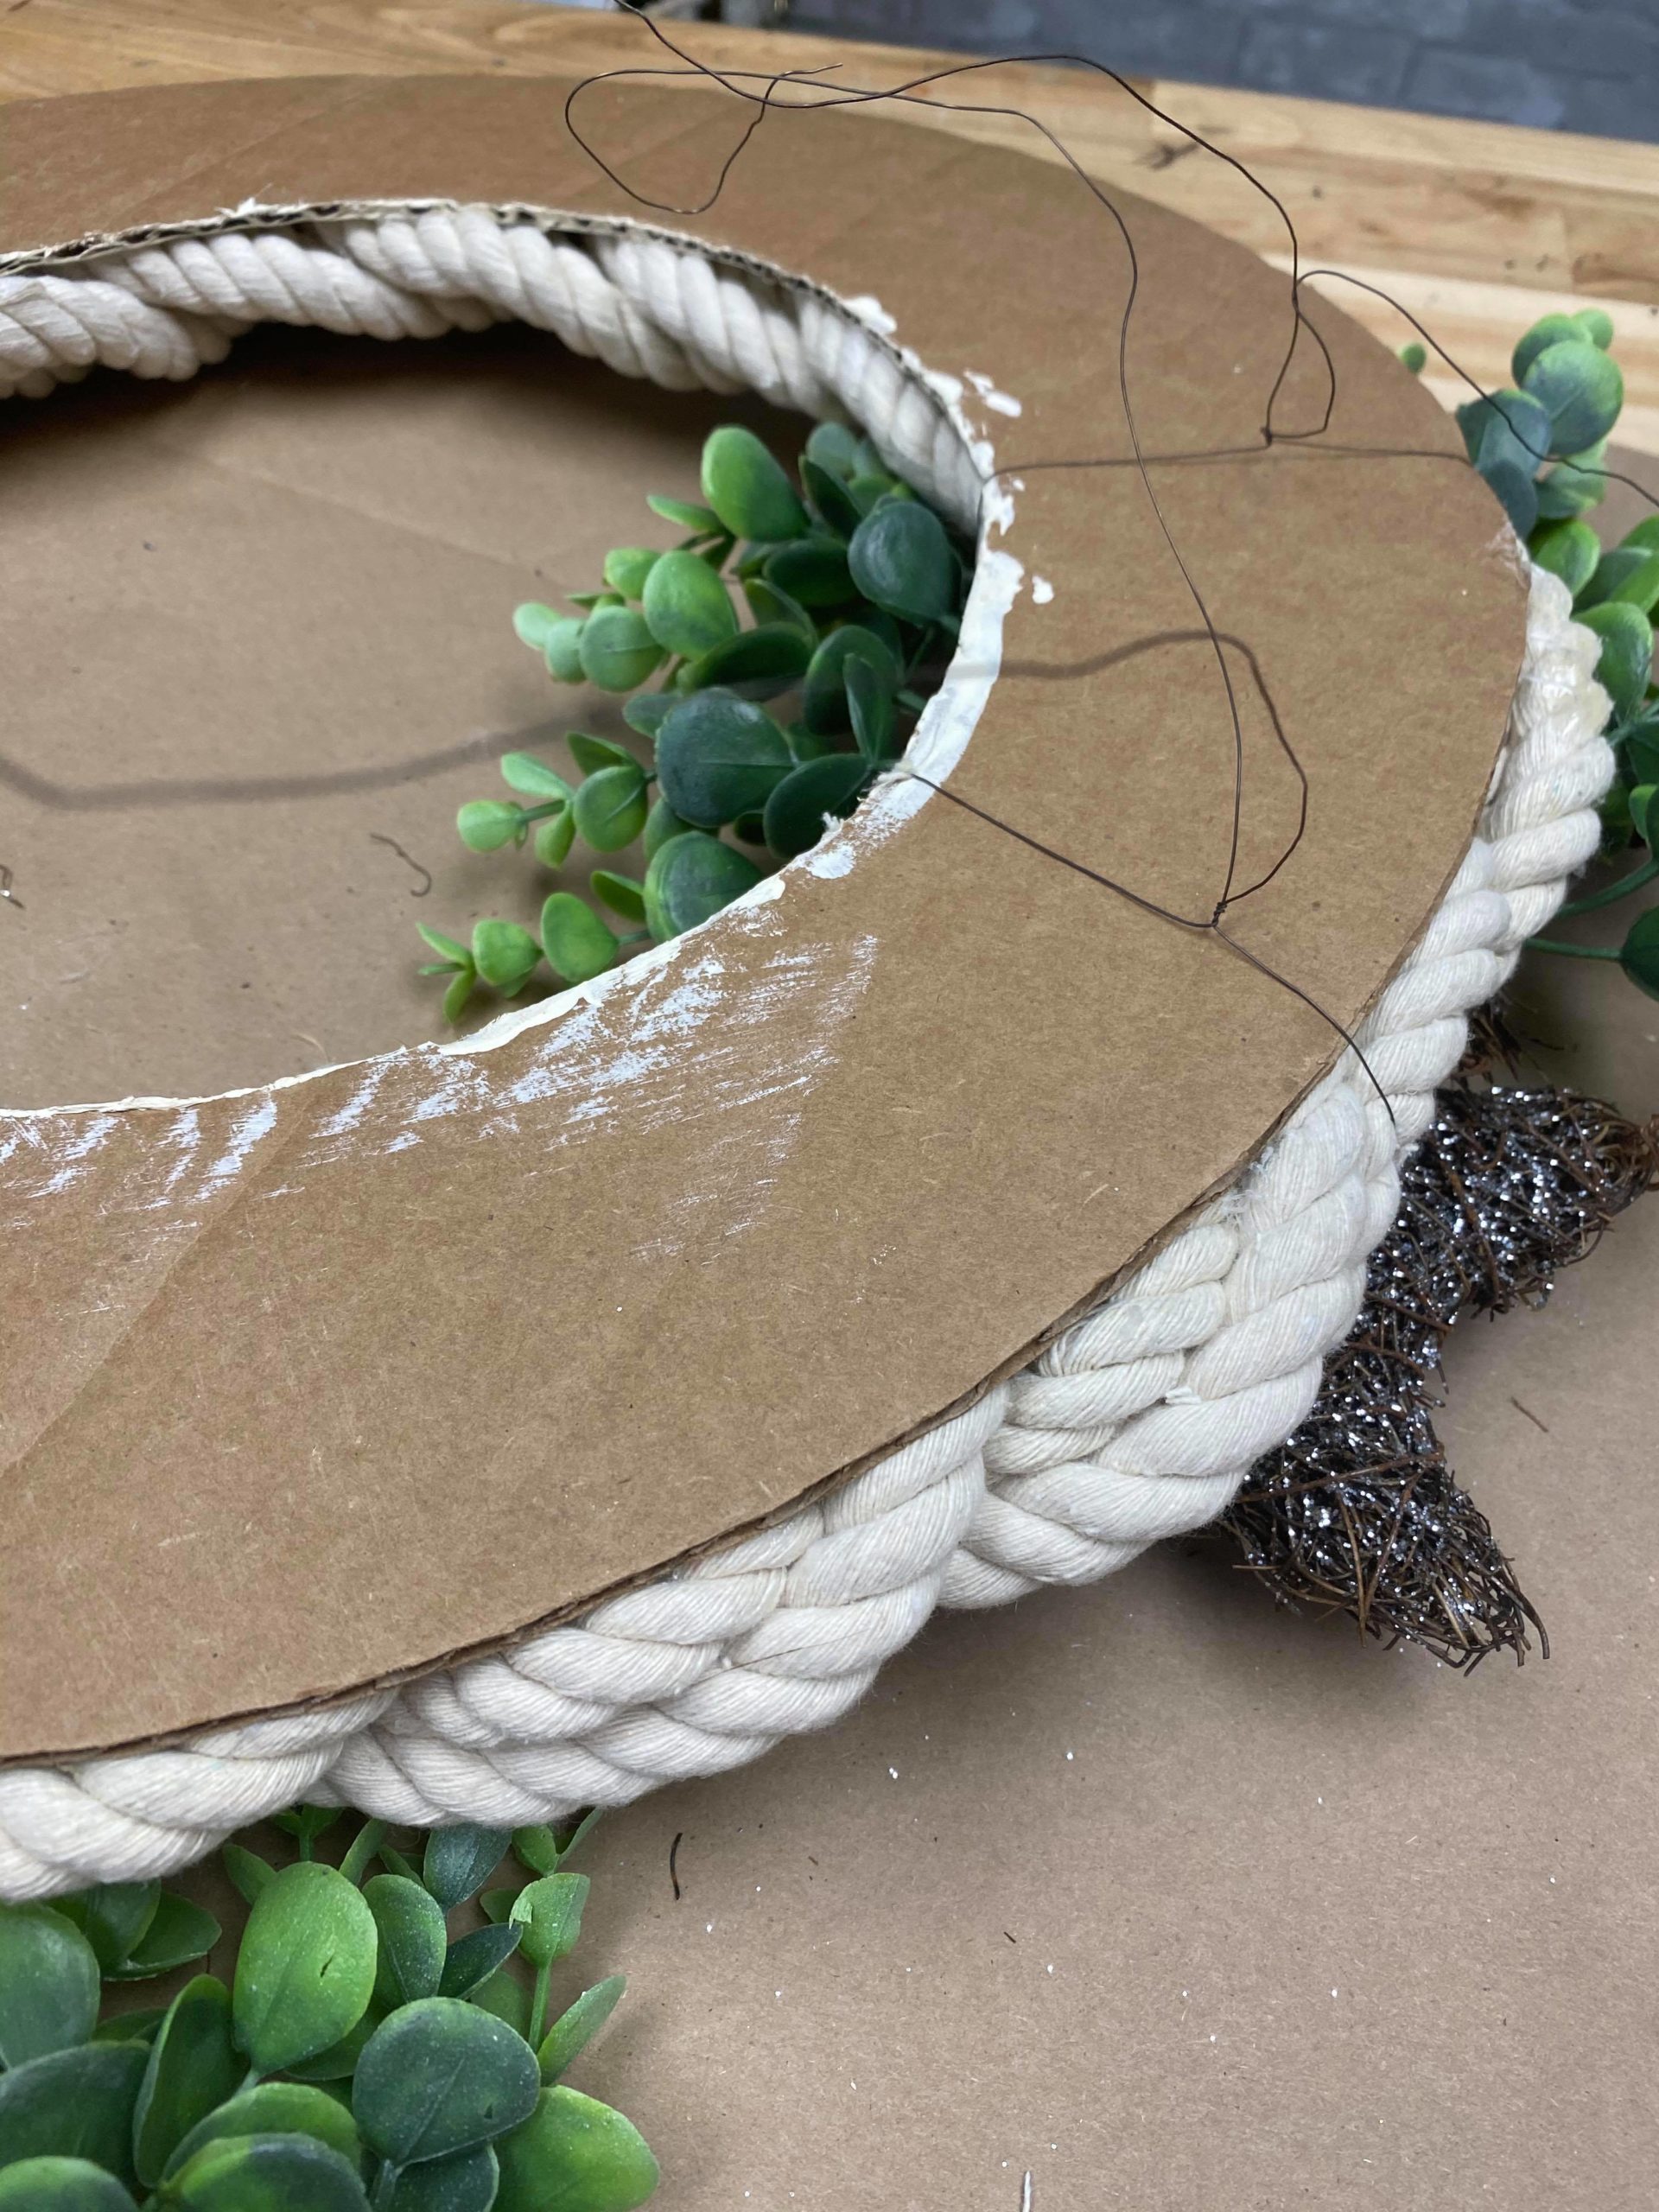 DIY Braided Nautical Rope Wreath - The Shabby Tree